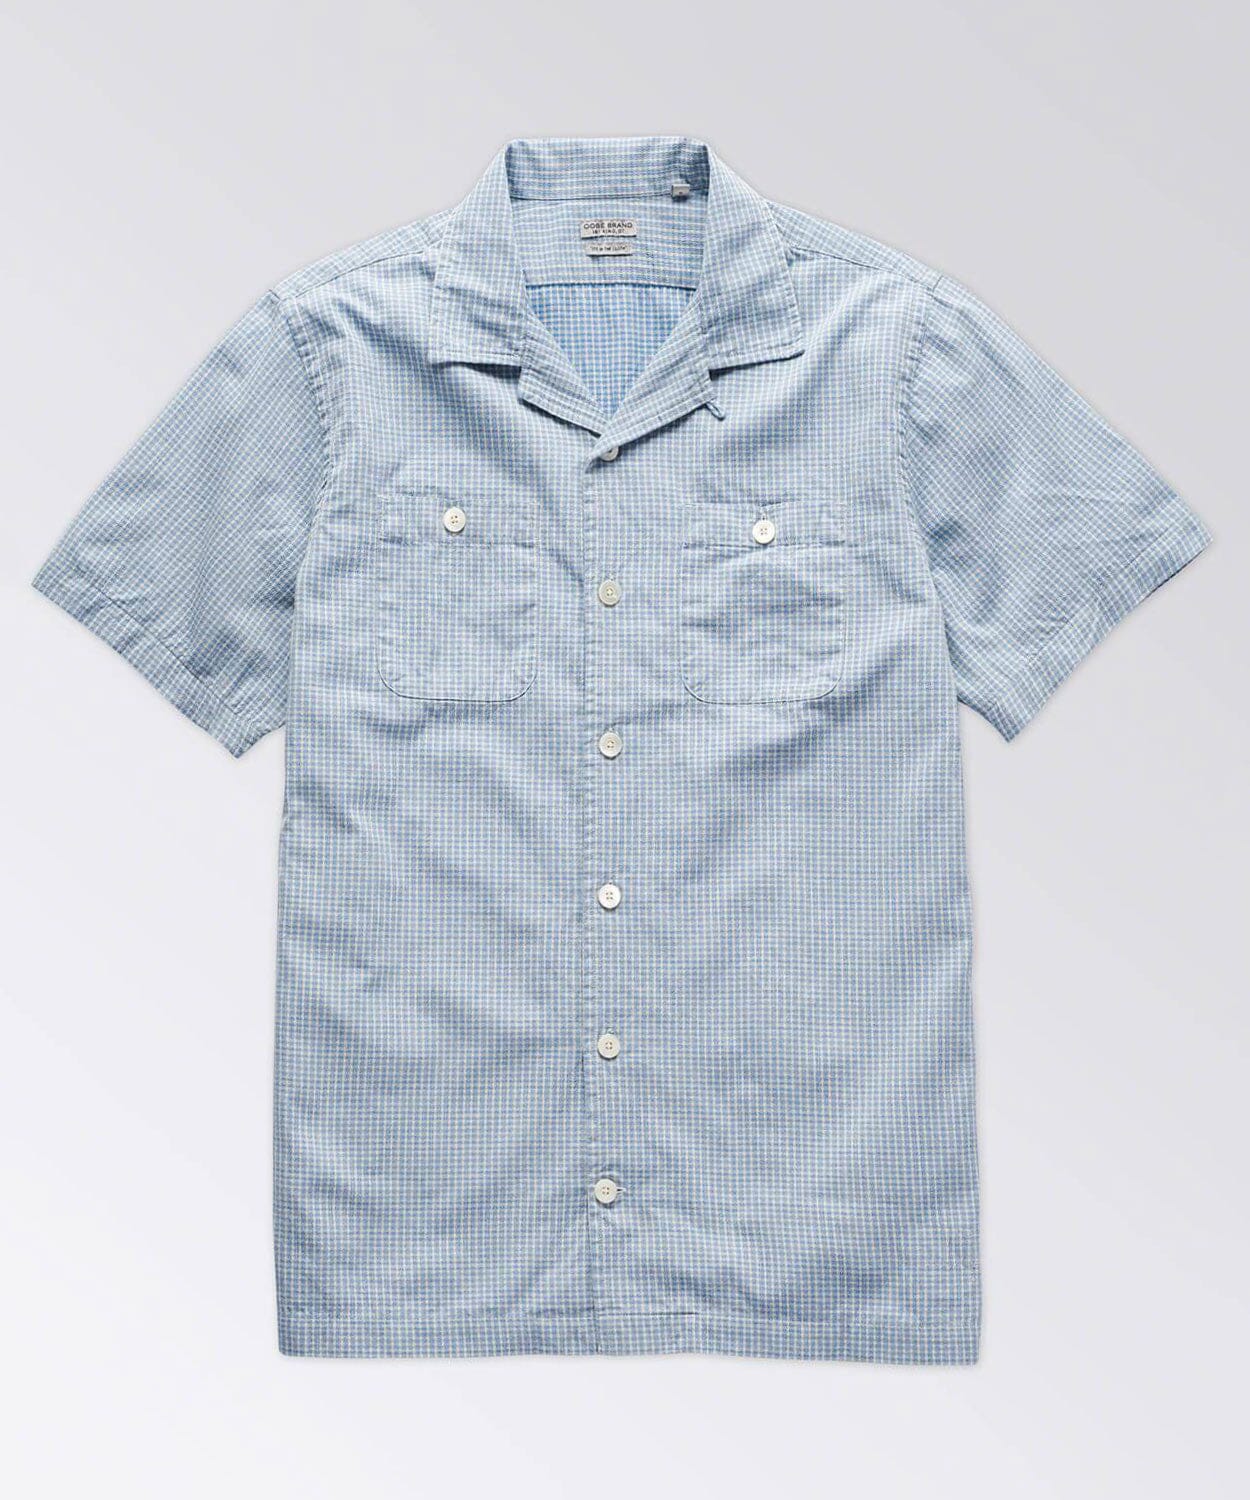 Elcott Short Sleeve Shirt Button Downs OOBE BRAND Blue Check S 